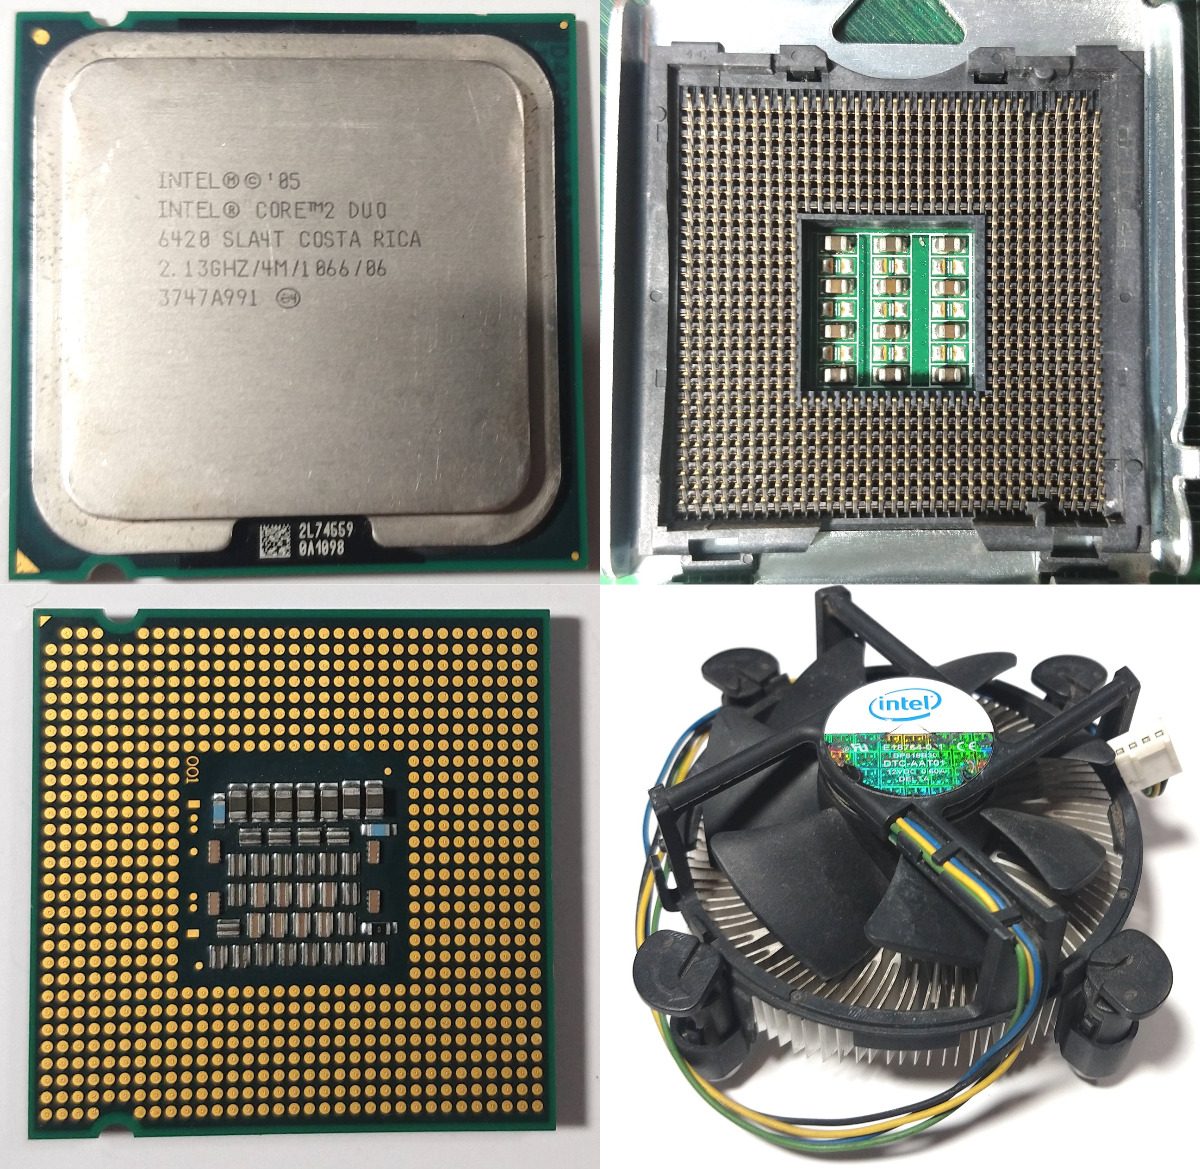 Intel Celeron E1500 Dual-Core Prozessor 2.2GHz, 512 MB Cache, Sockel 775, 800MHz FSB